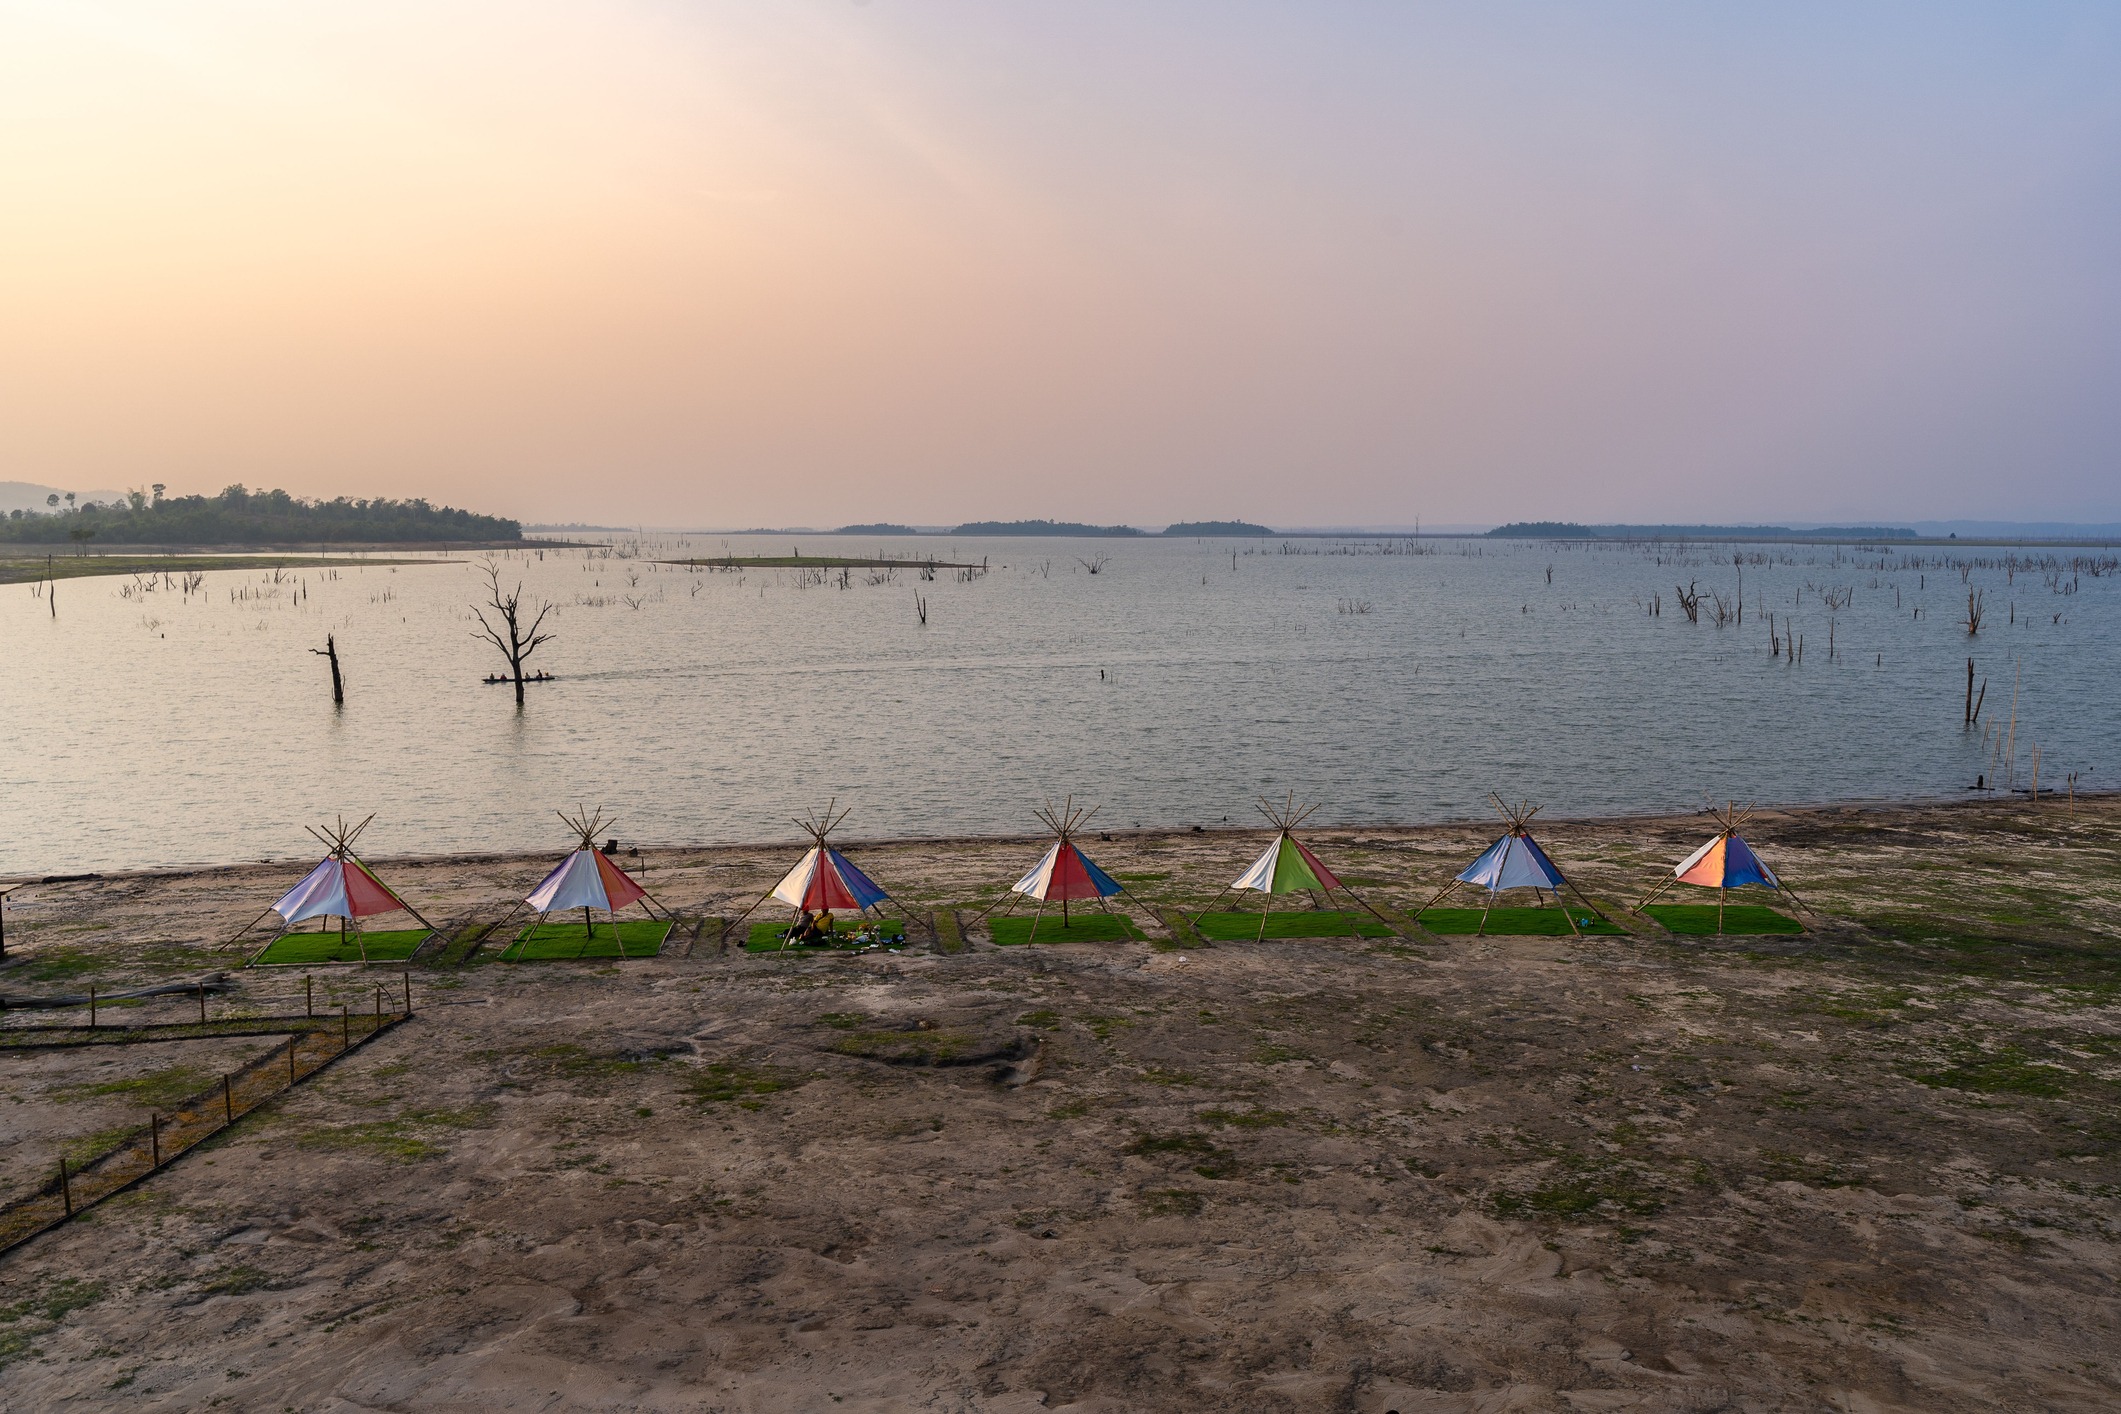 Scenic view of tents on the shore of Falang Lake (Thakhek loop), Laos at sunset